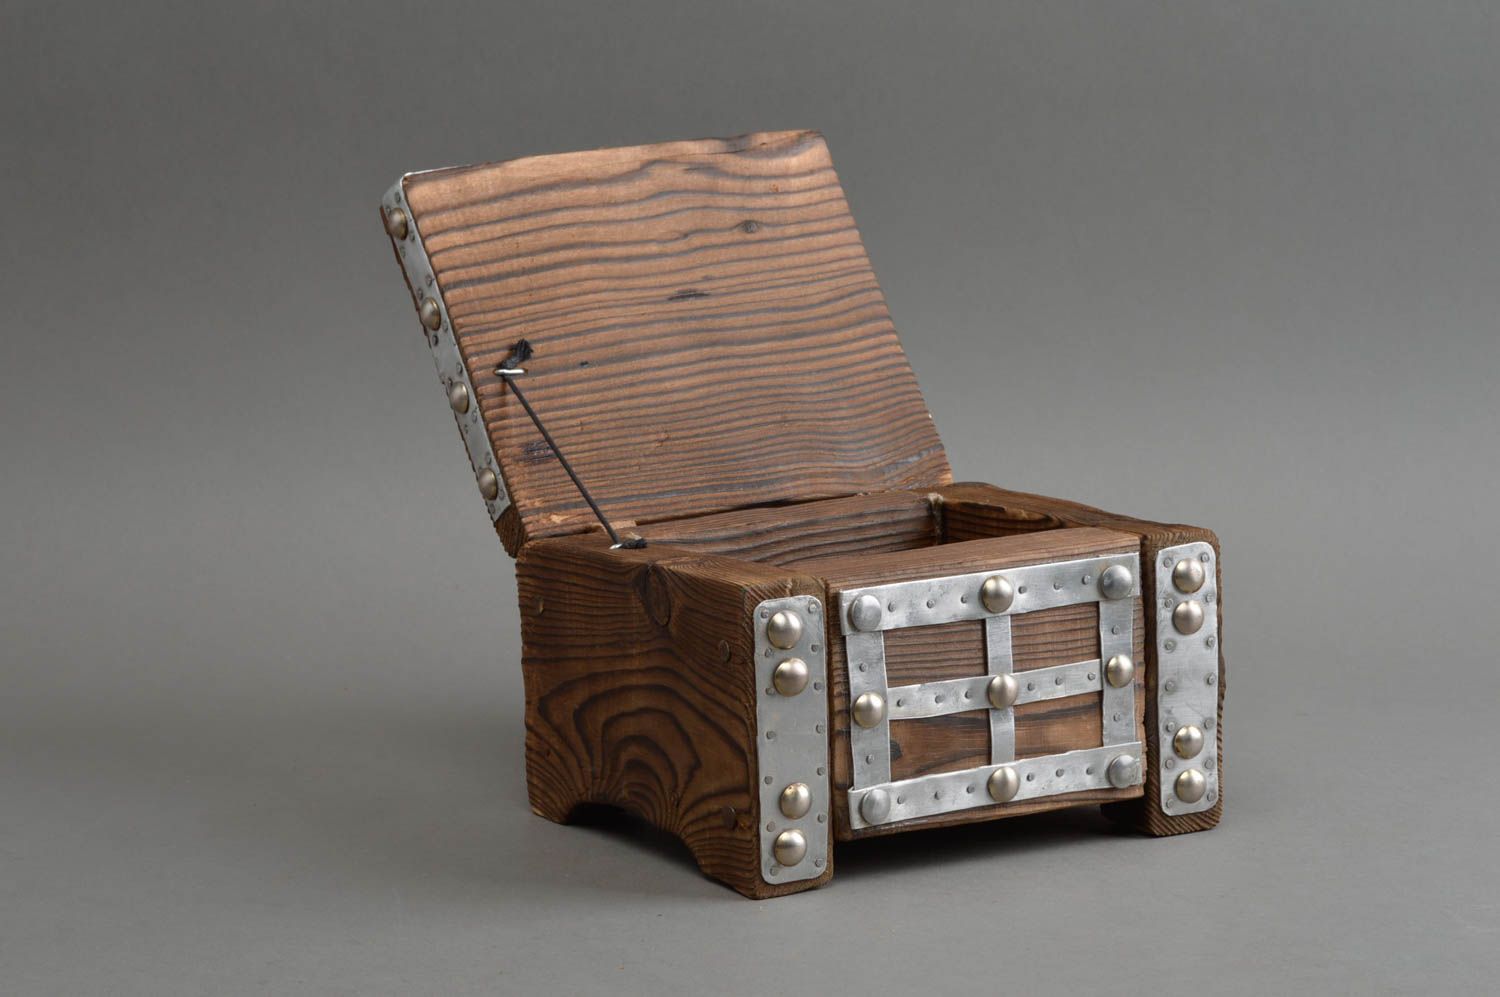 Beautiful handmade wooden jewelry box designer home decorations gifts ideas photo 2